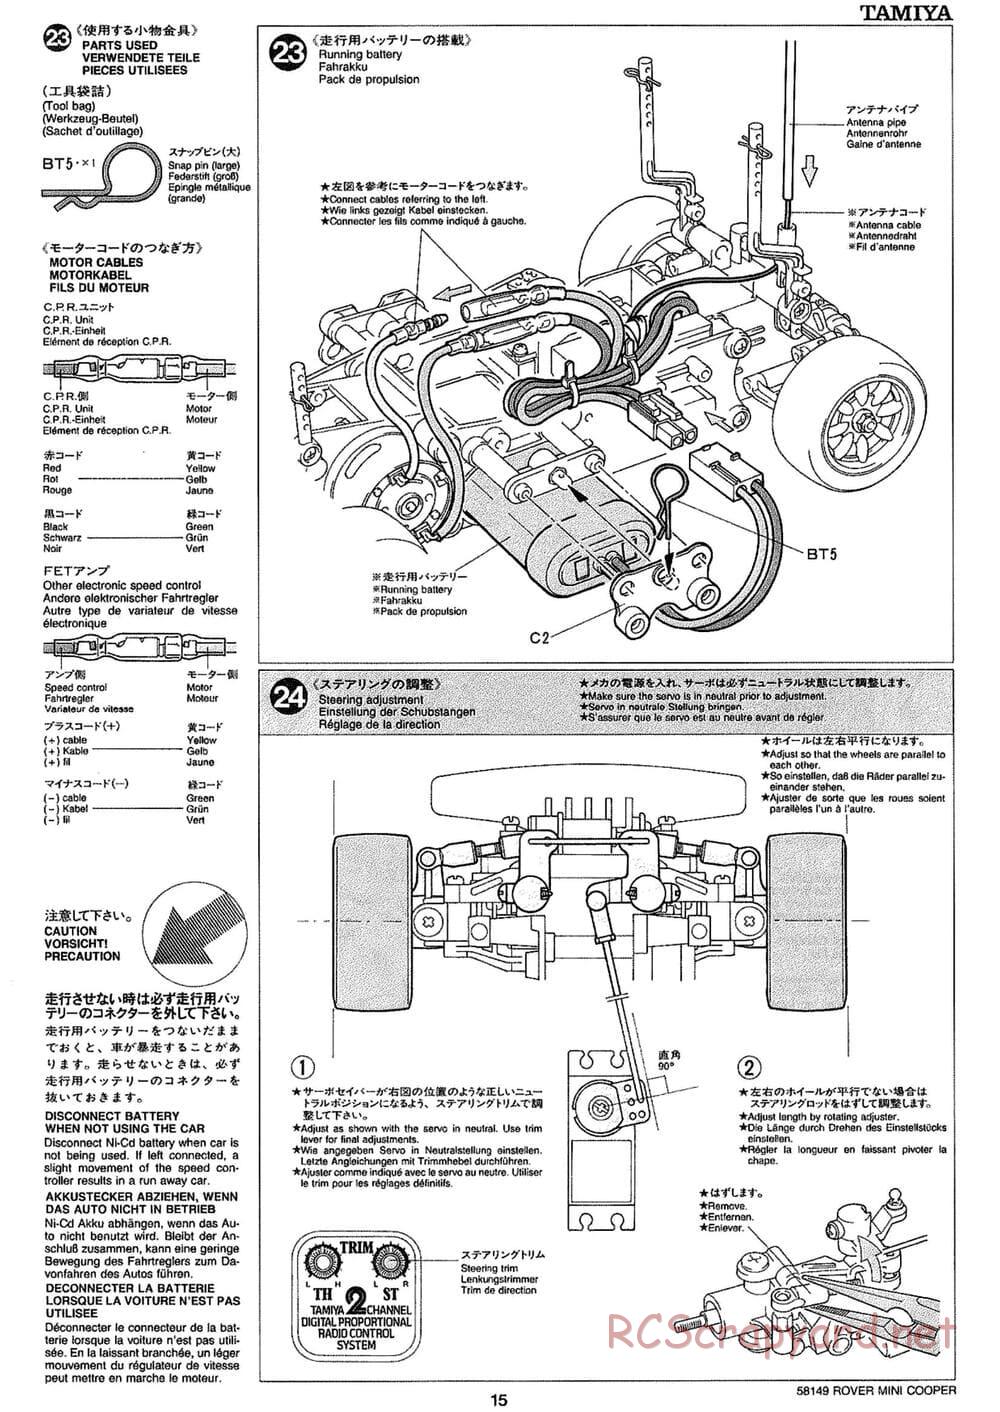 Tamiya - Rover Mini Cooper - M01 Chassis - Manual - Page 15